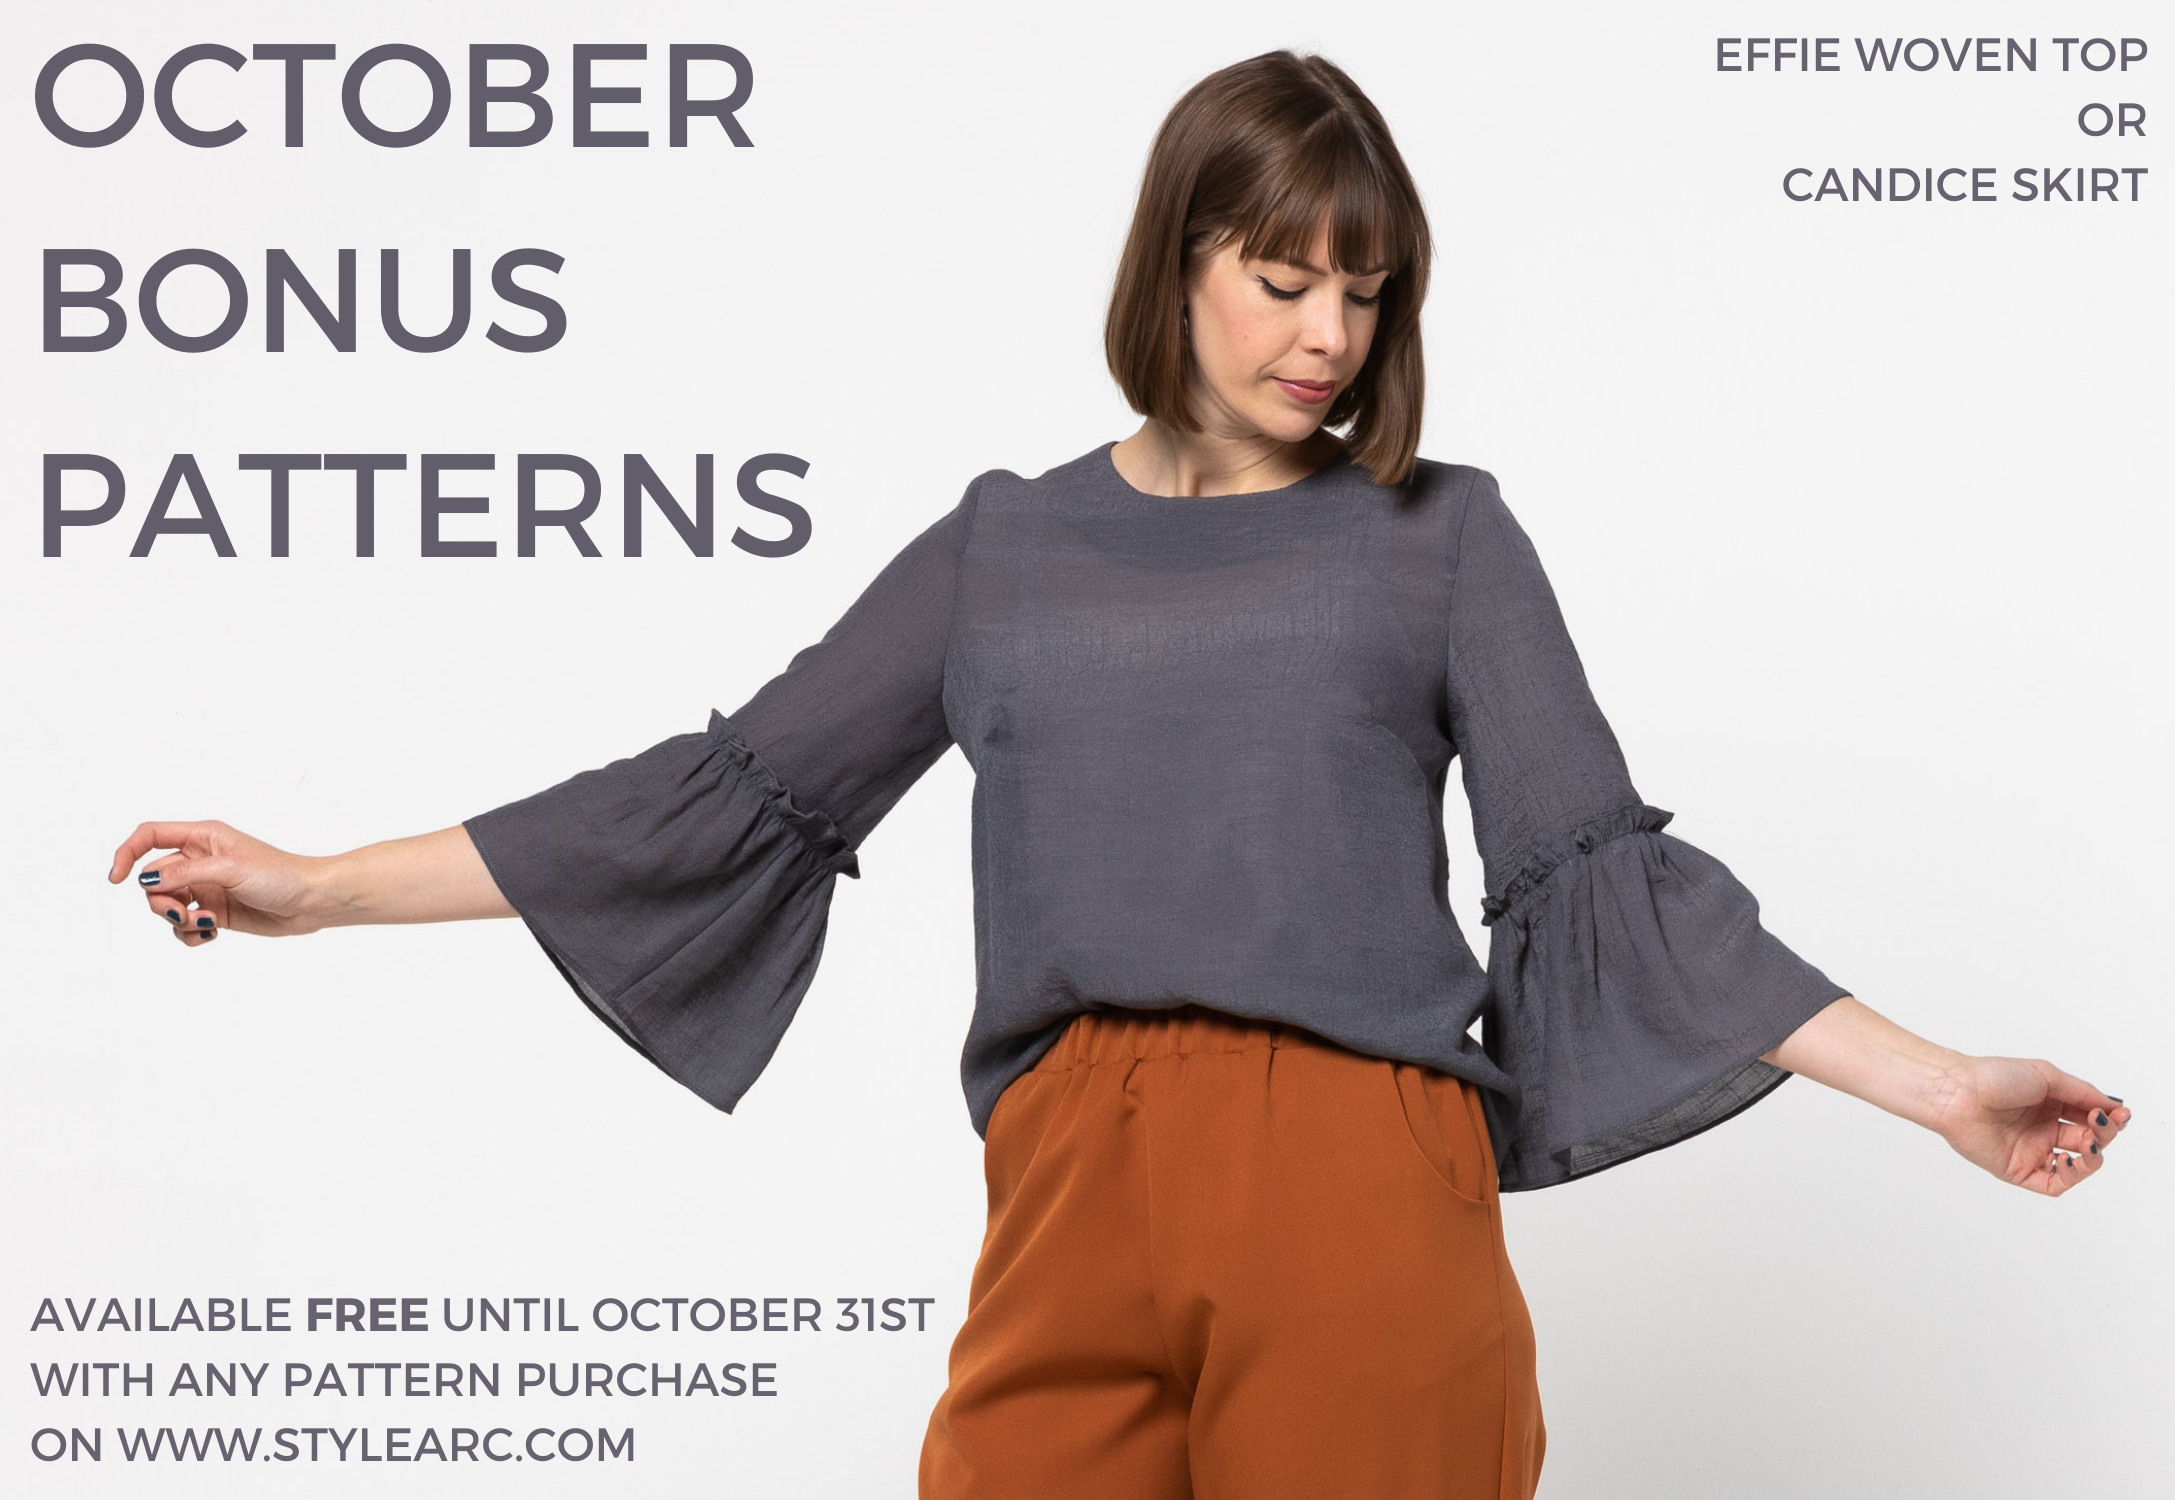 October Bonus Patterns - Effie Woven Top or Candice Skirt 